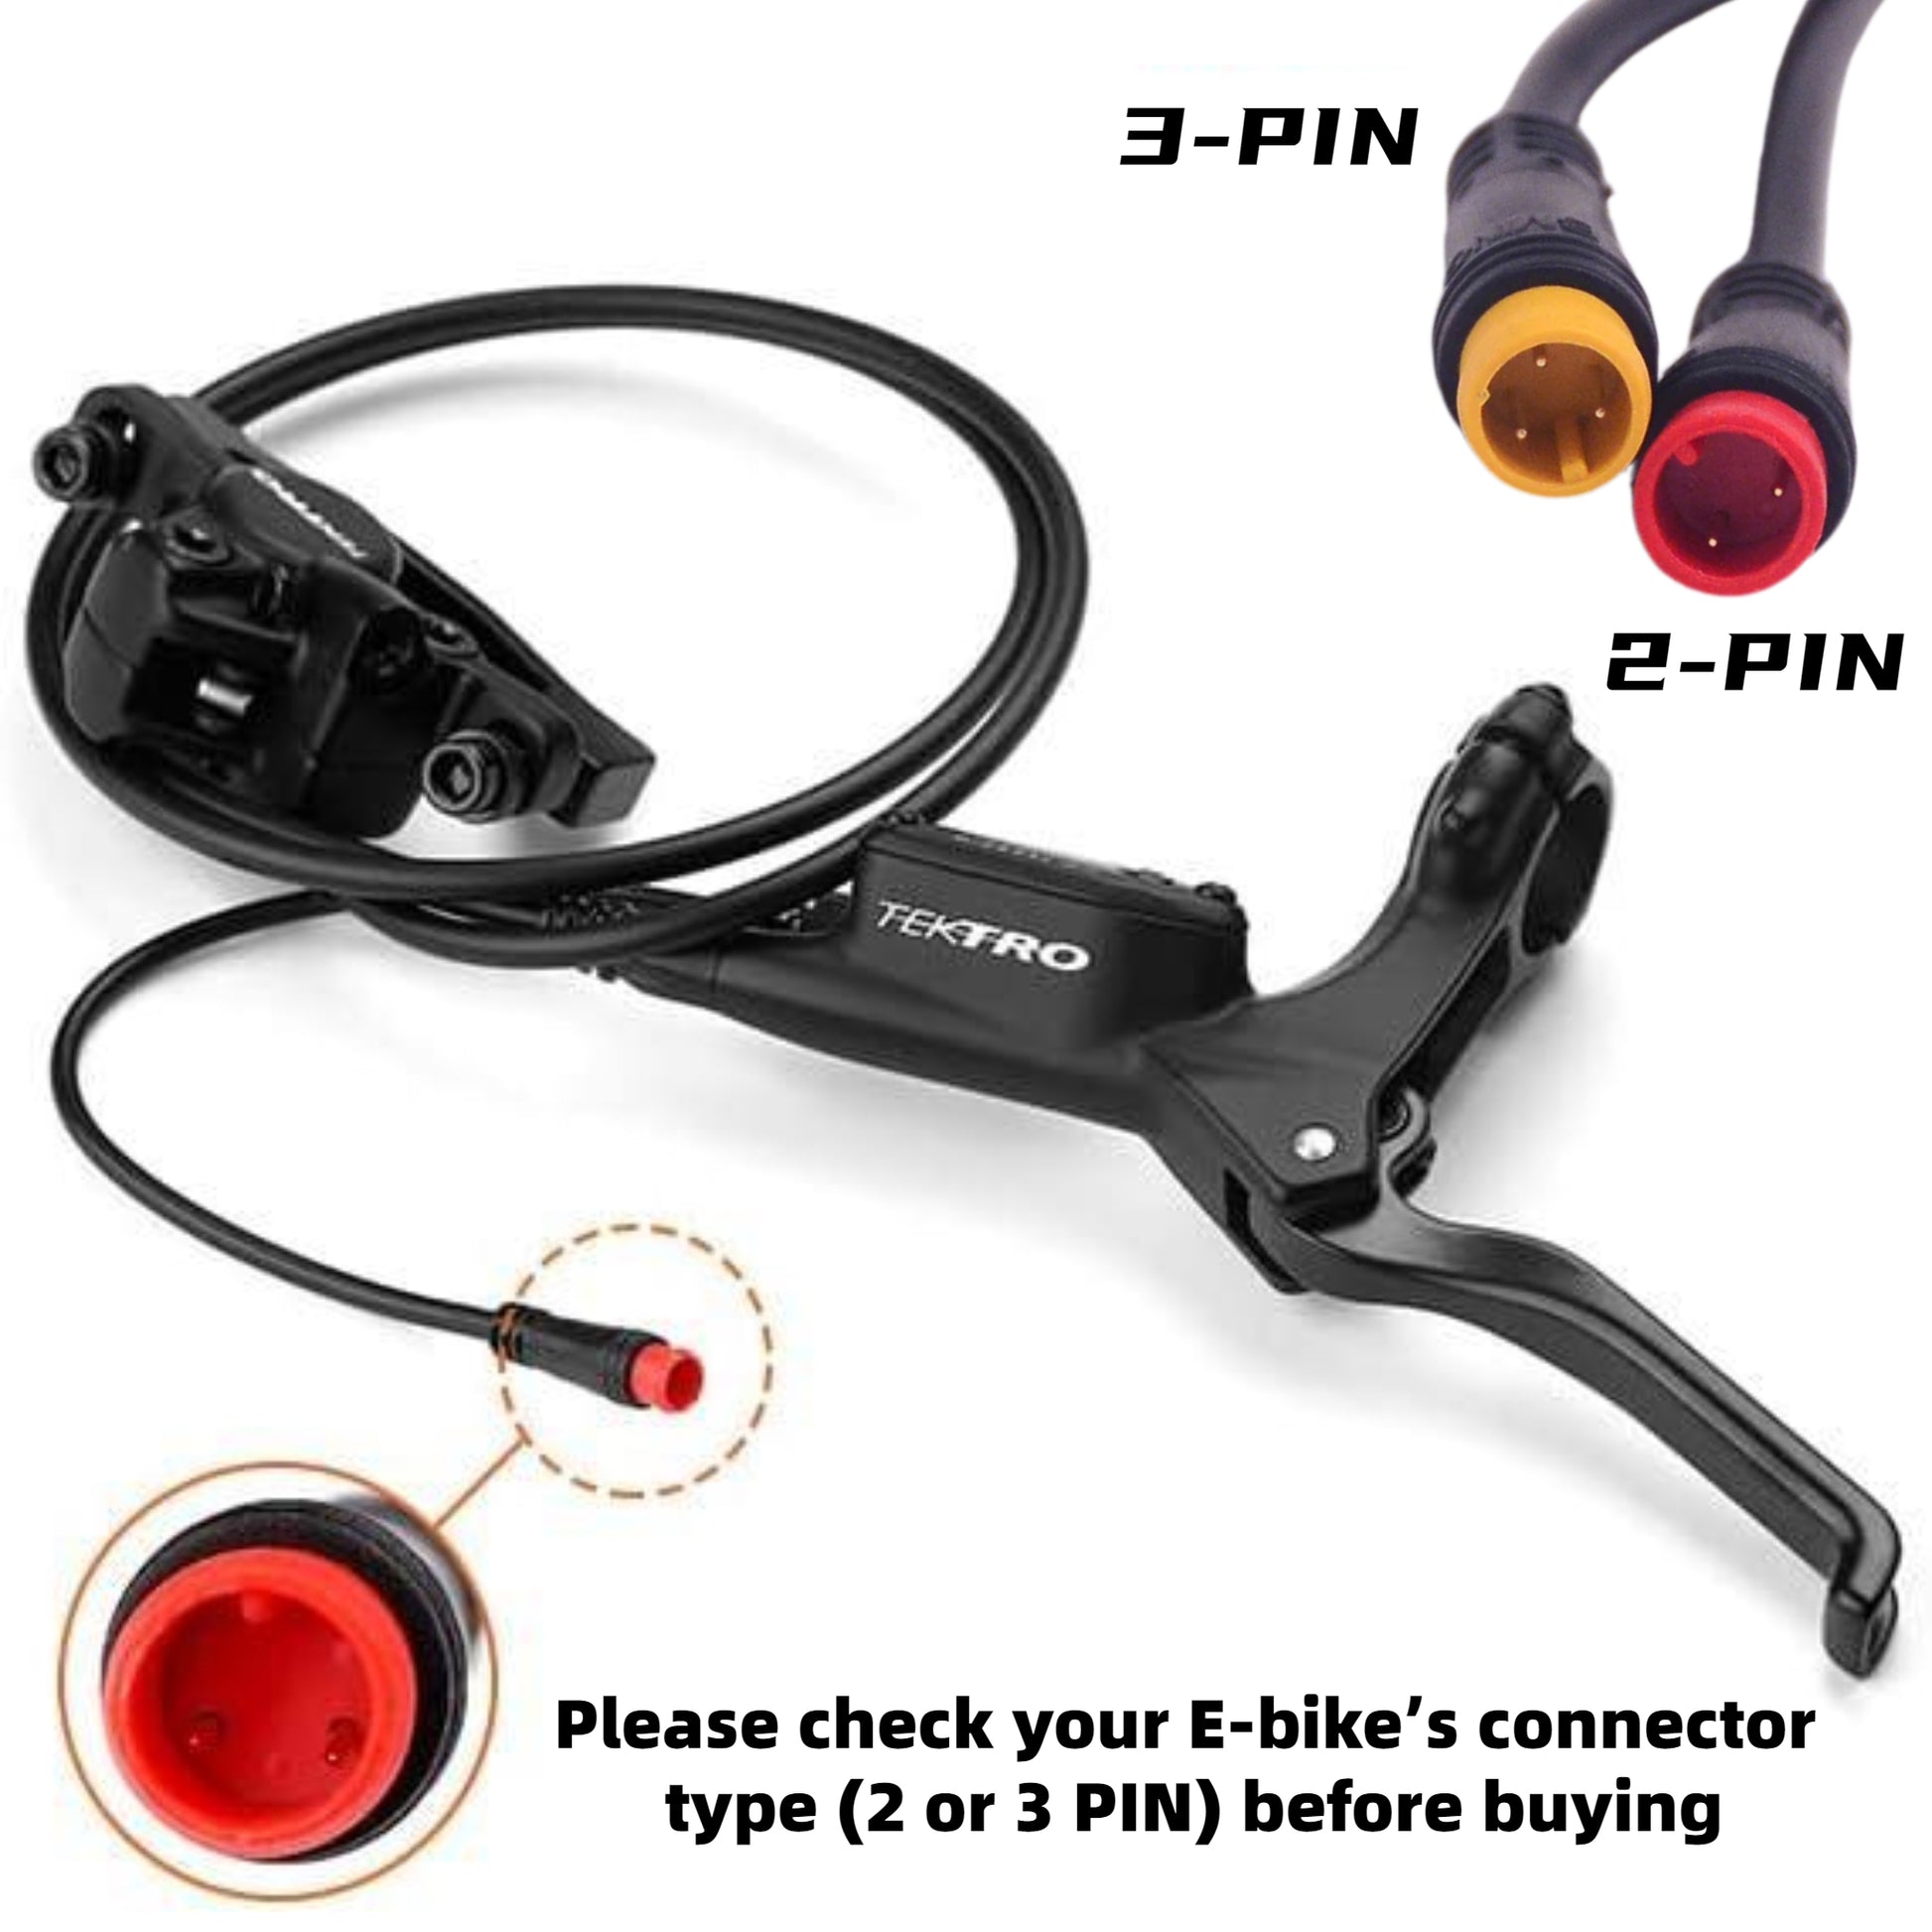 Tektro E350 Please check your E-bike’s connector model (2 or 3 PIN) before purchasing